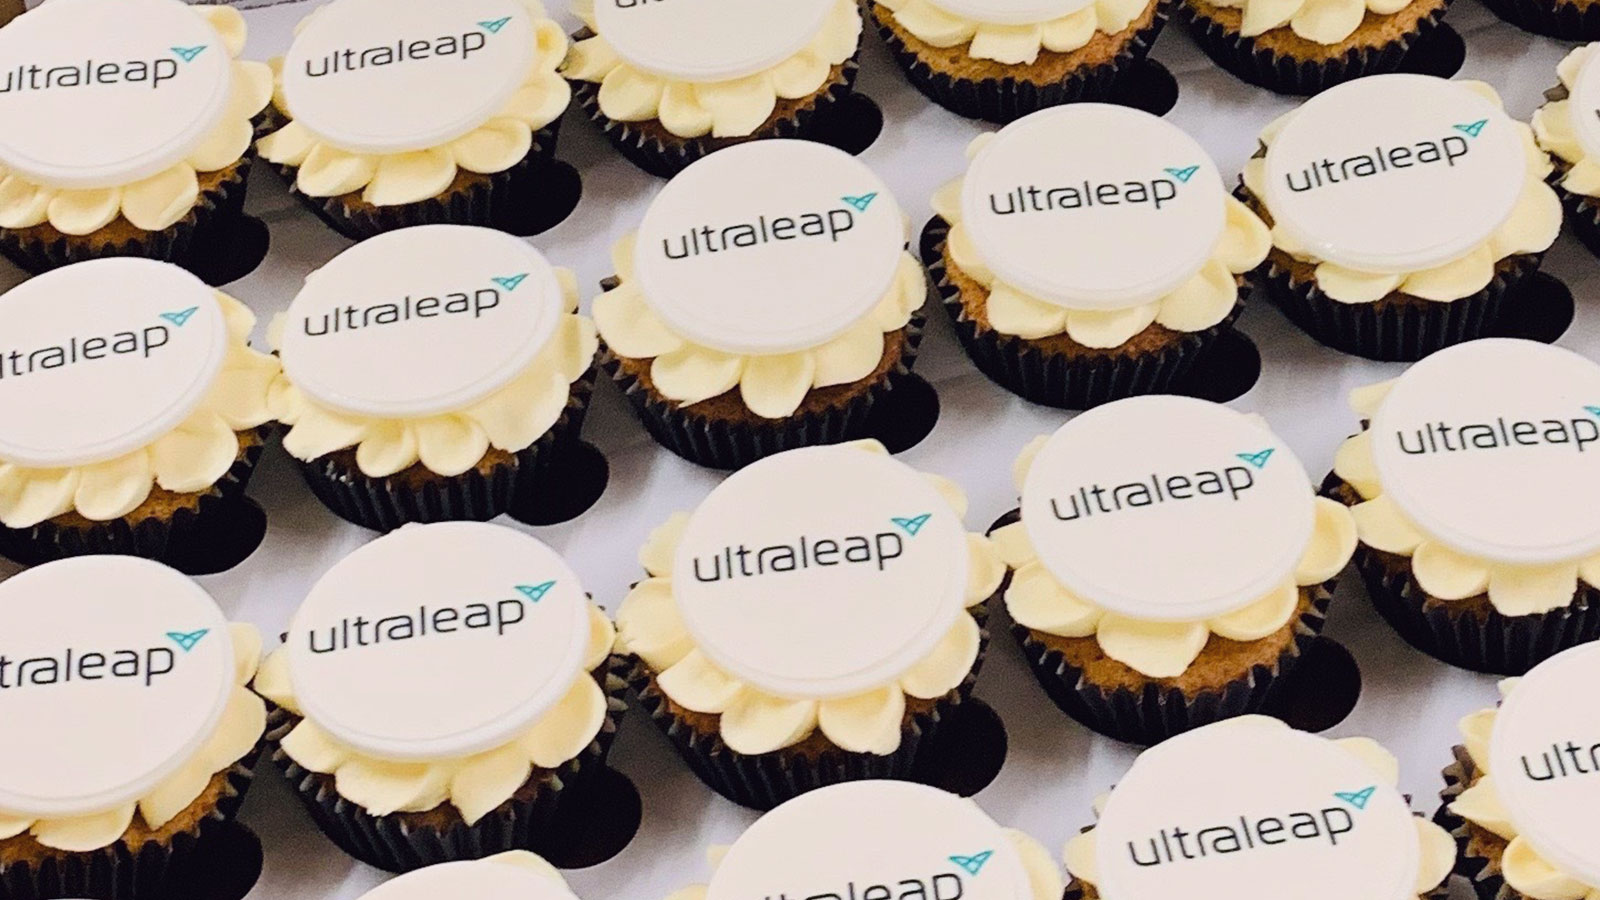 Ultraleap cupcakes